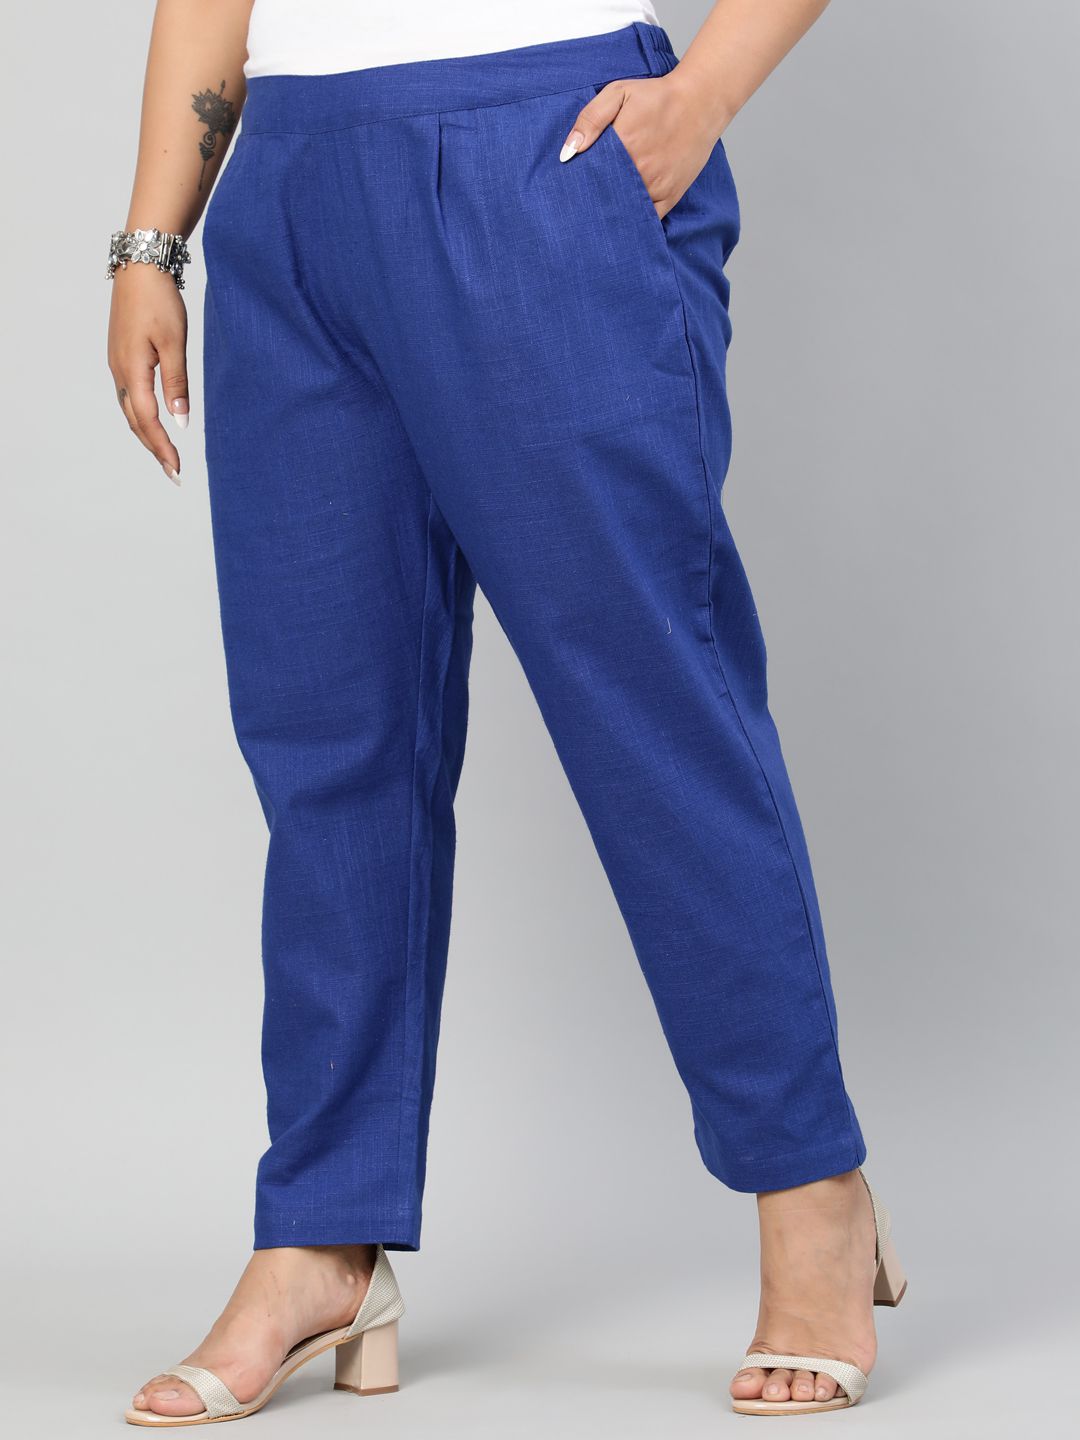 Shop women's casual pants with elastic waist